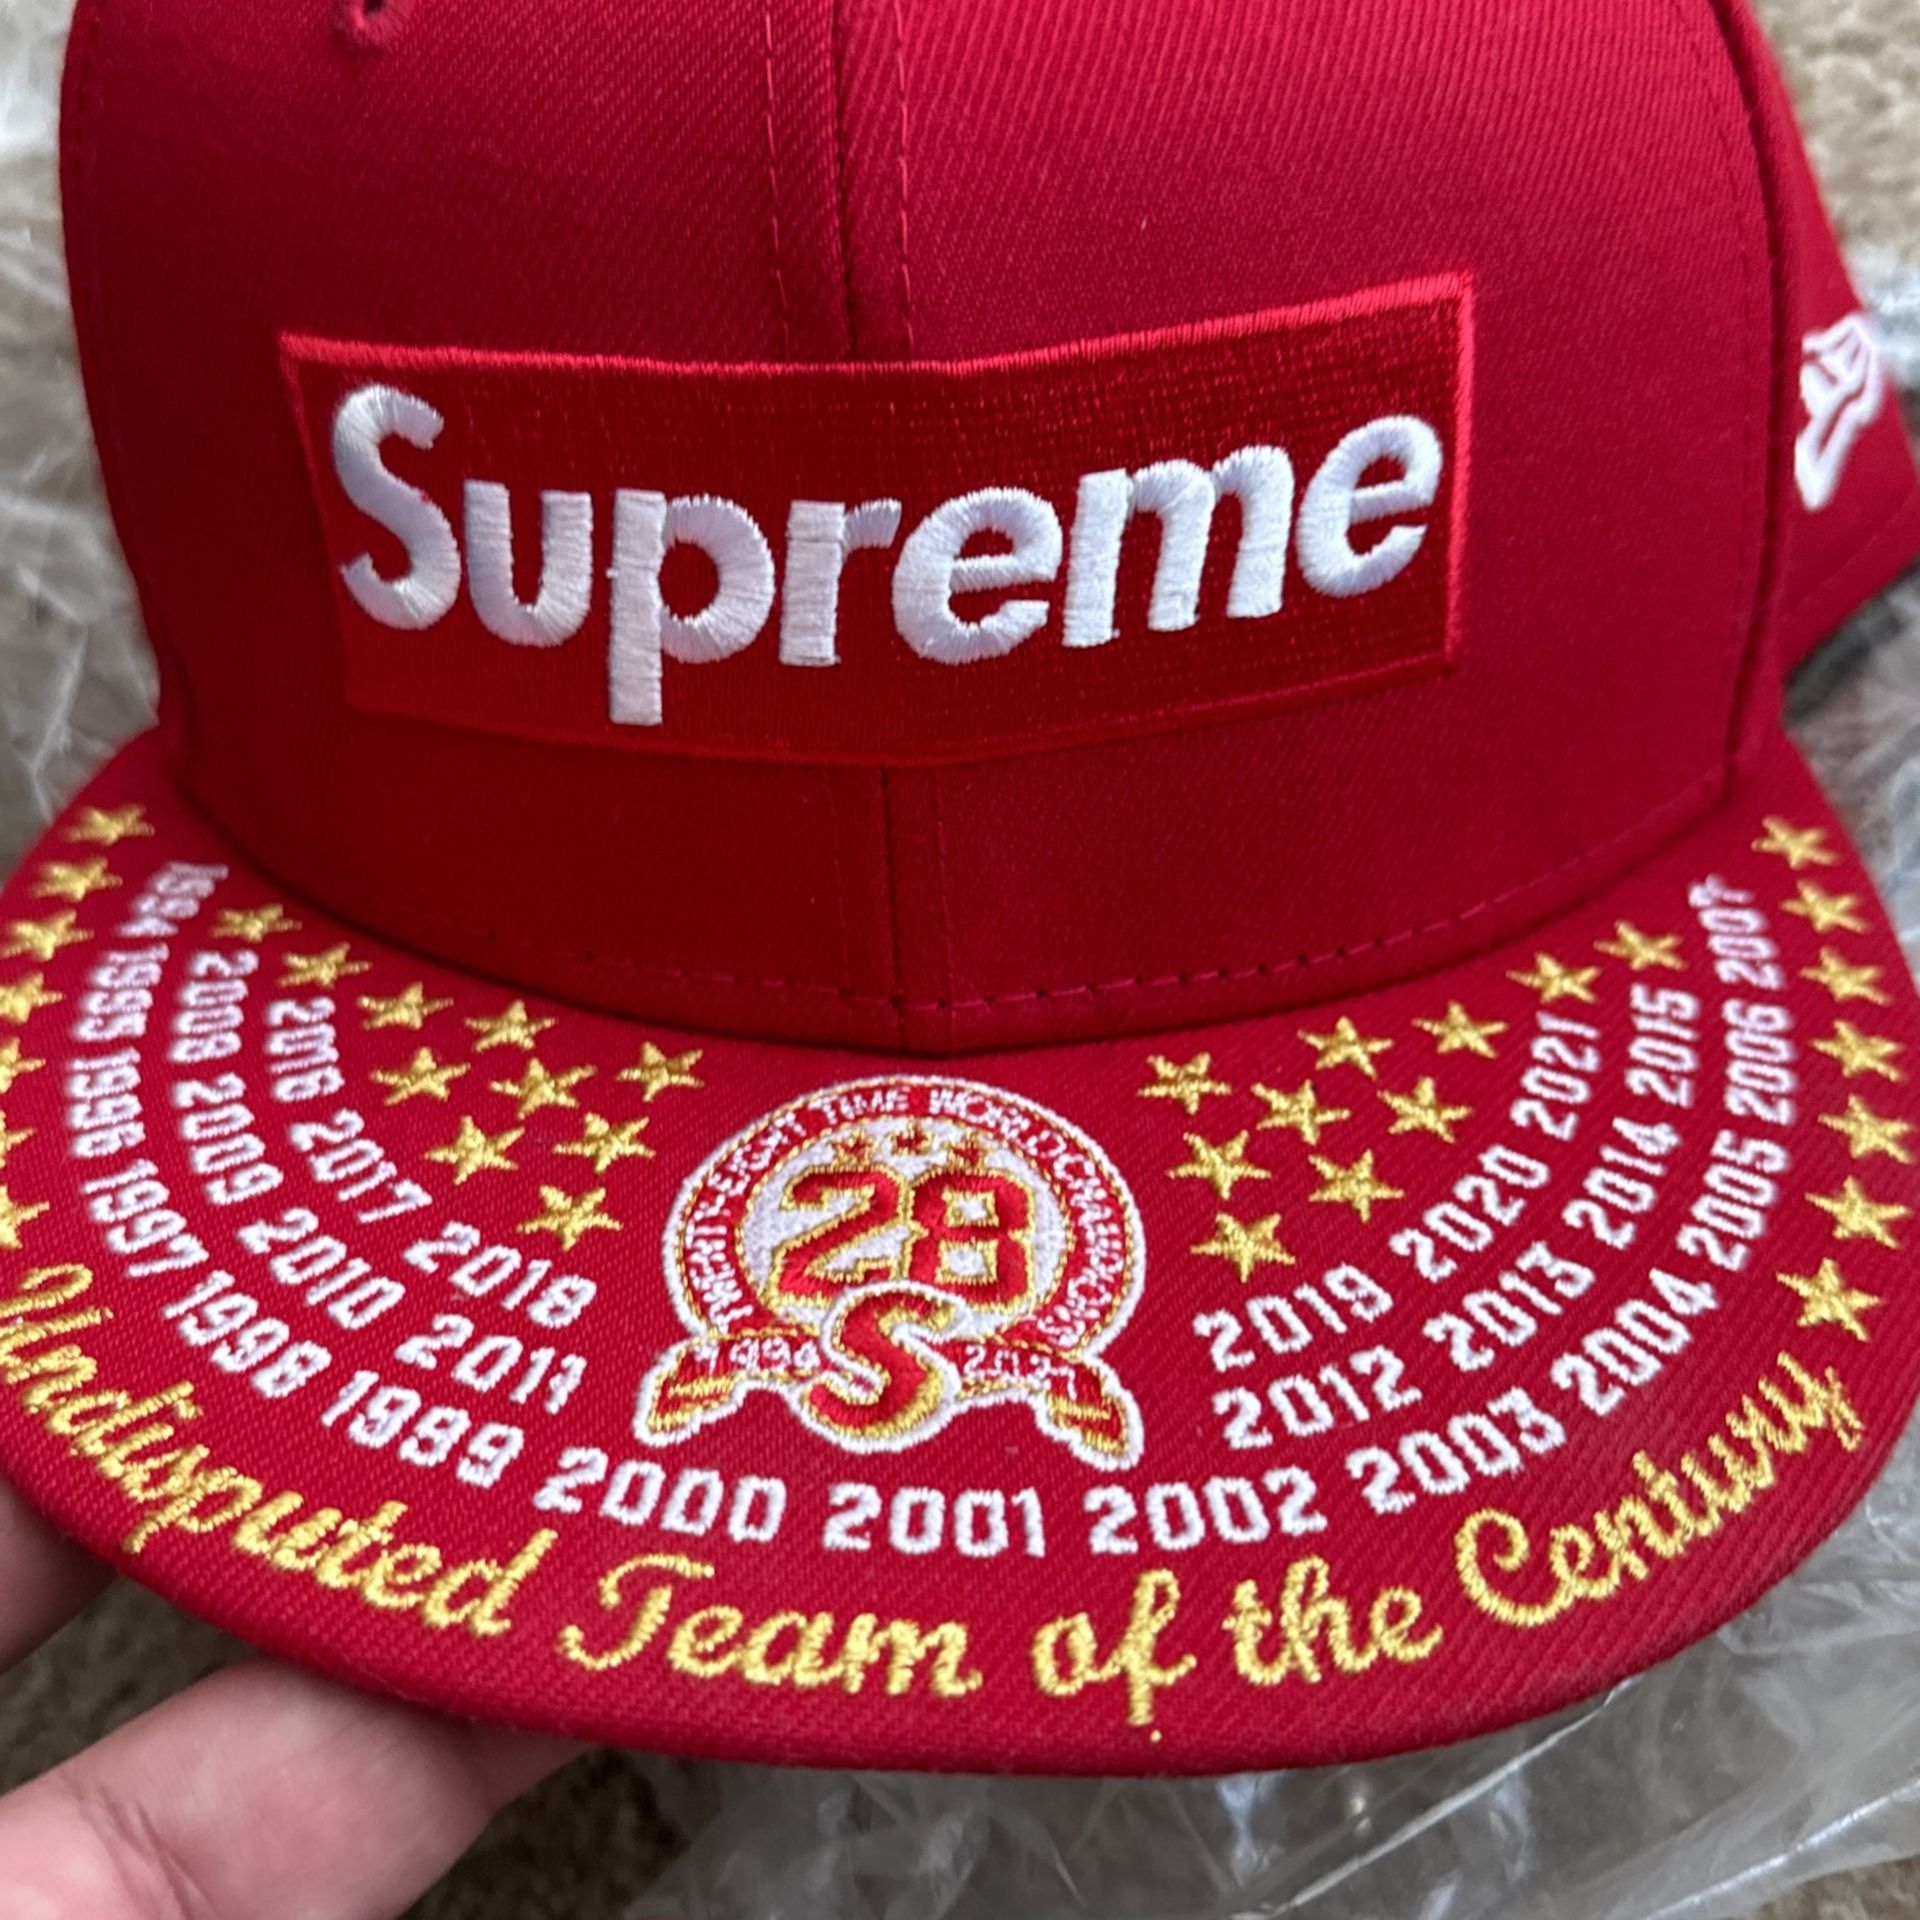 Supreme 28 Hat Ultra Rare Need Money Selling Cheap